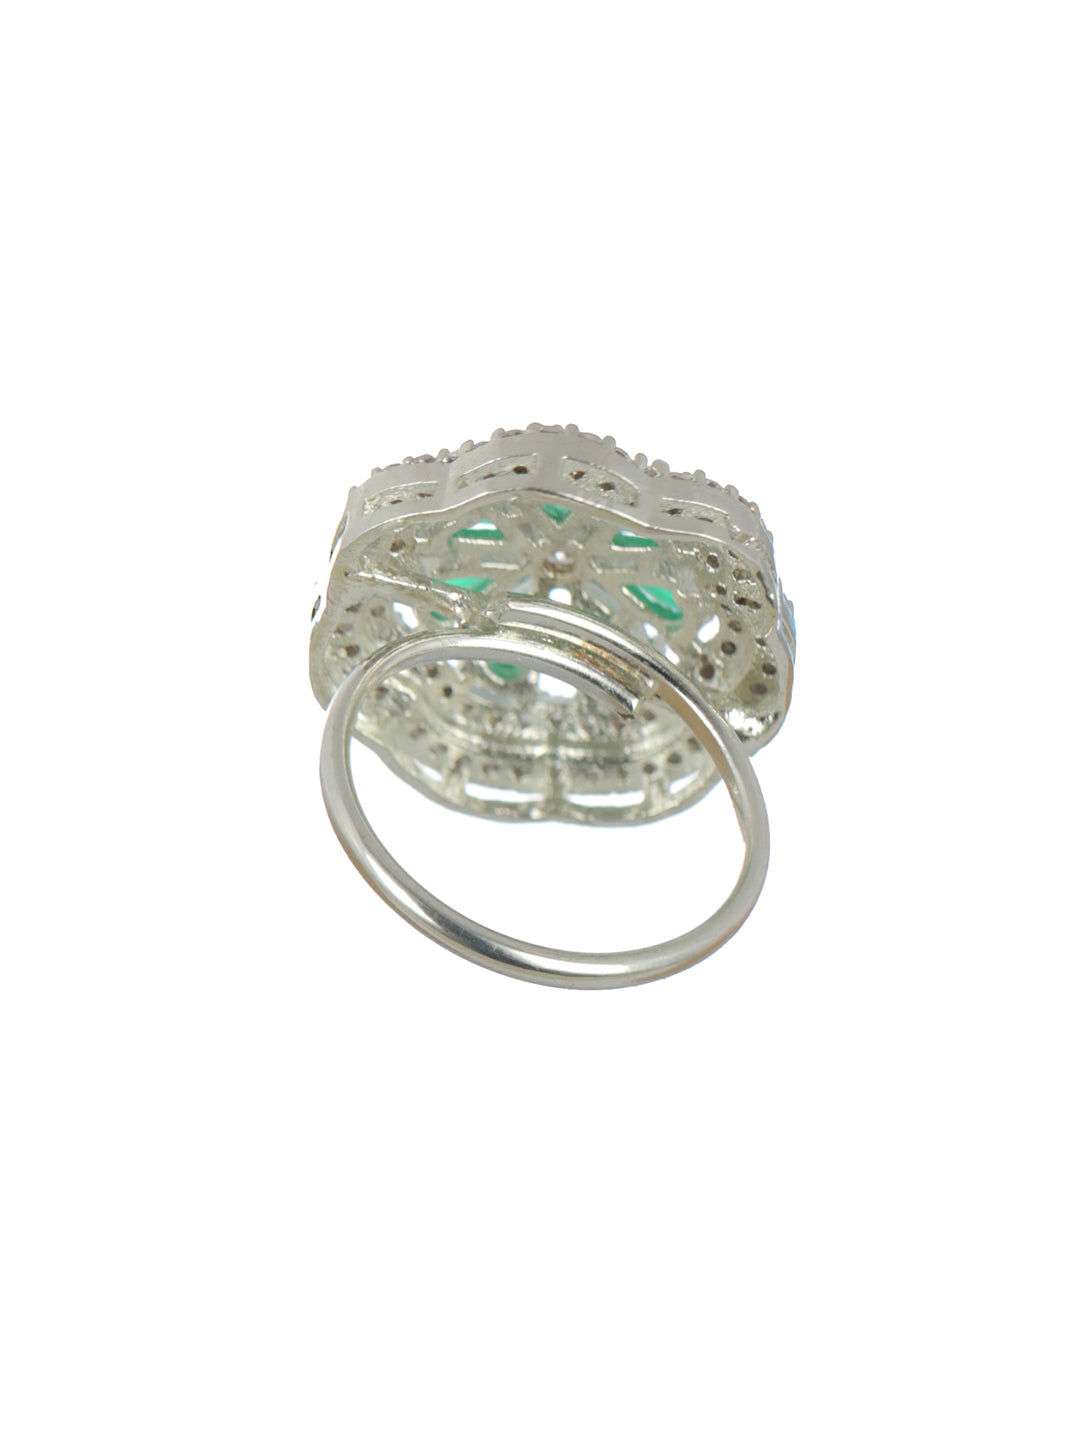 Priyaasi Elegant Green Floral Rose Gold-Plated Ring